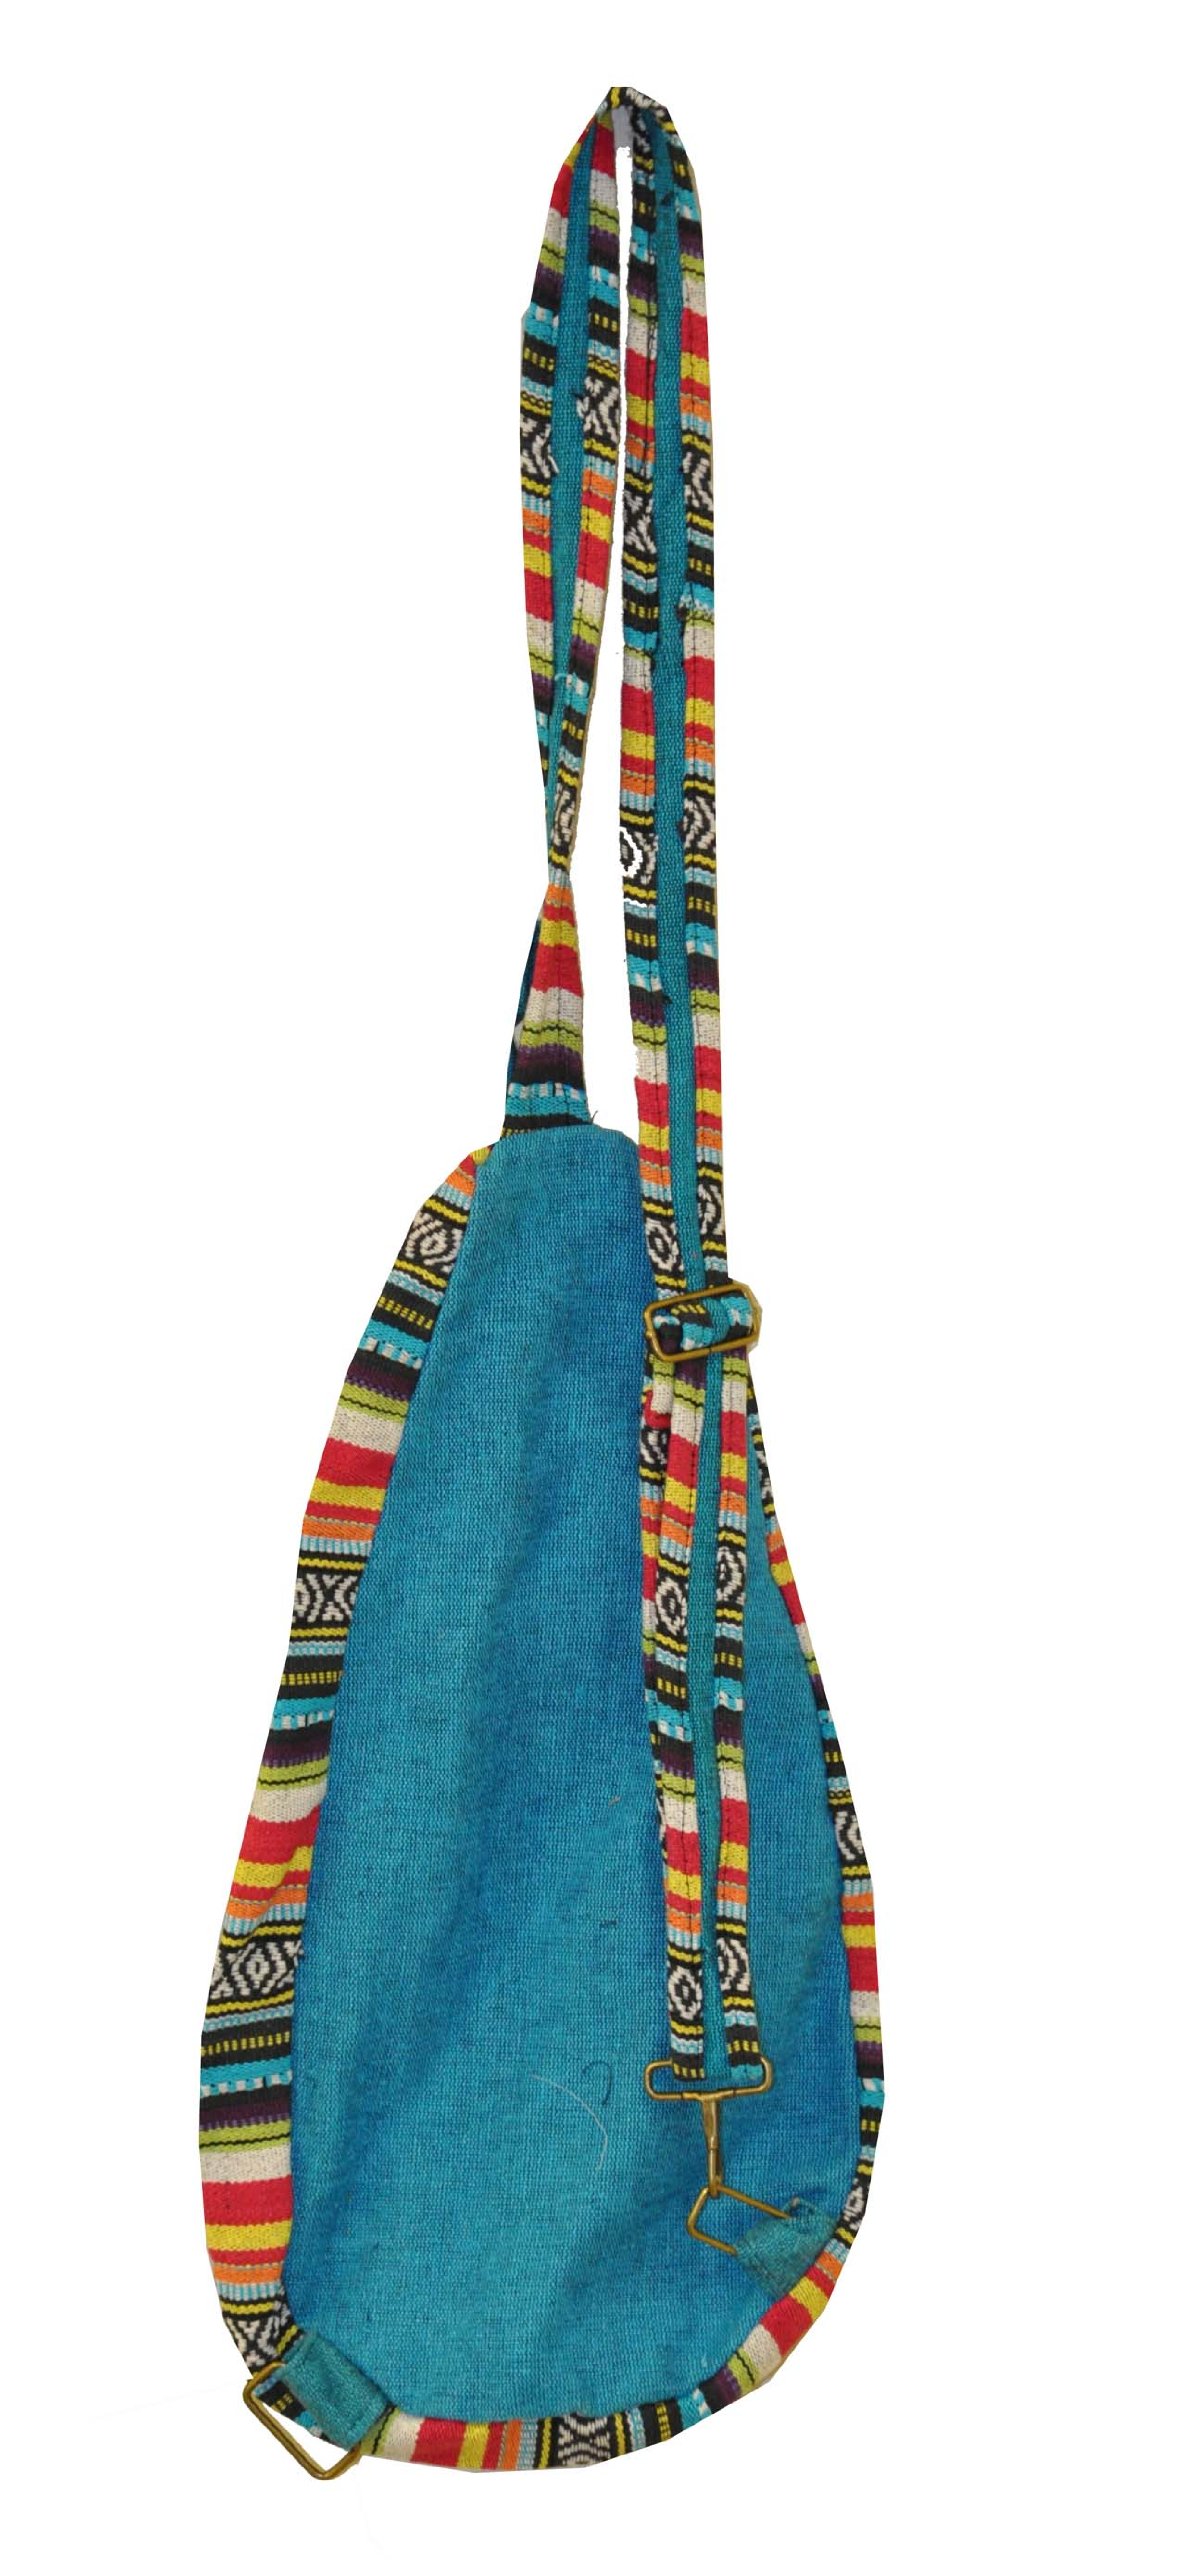 Mandala Crafts Boho Sling Bag for Women Crossbody Purse – Bohemian One Strap Backpack – Hippie Boho Backpack for Men Daypack Turquoise